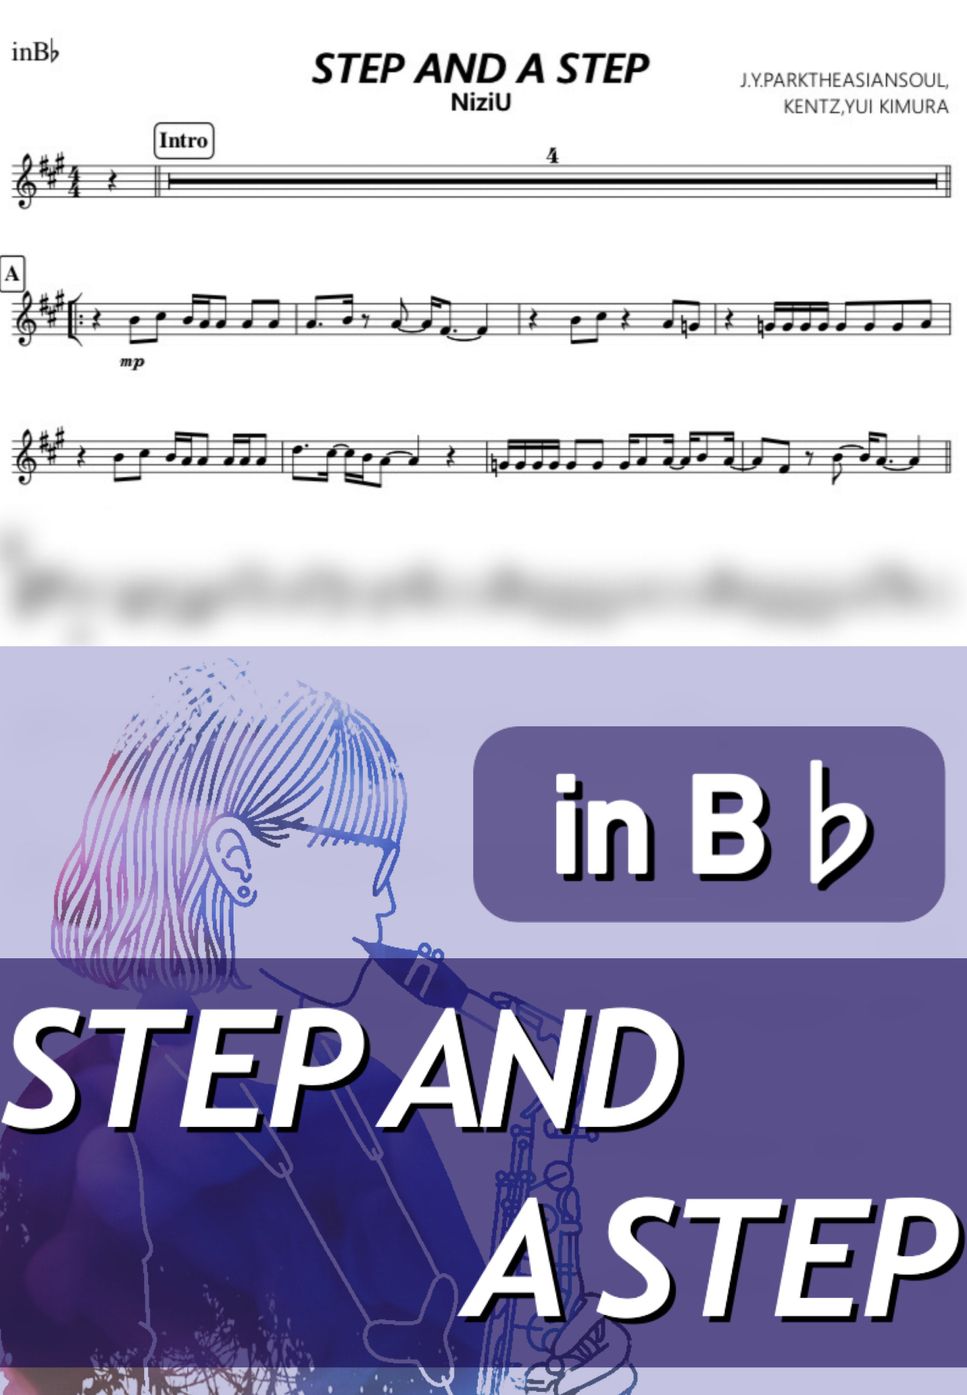 NiziU - Step and a step (B♭) by kanamusic